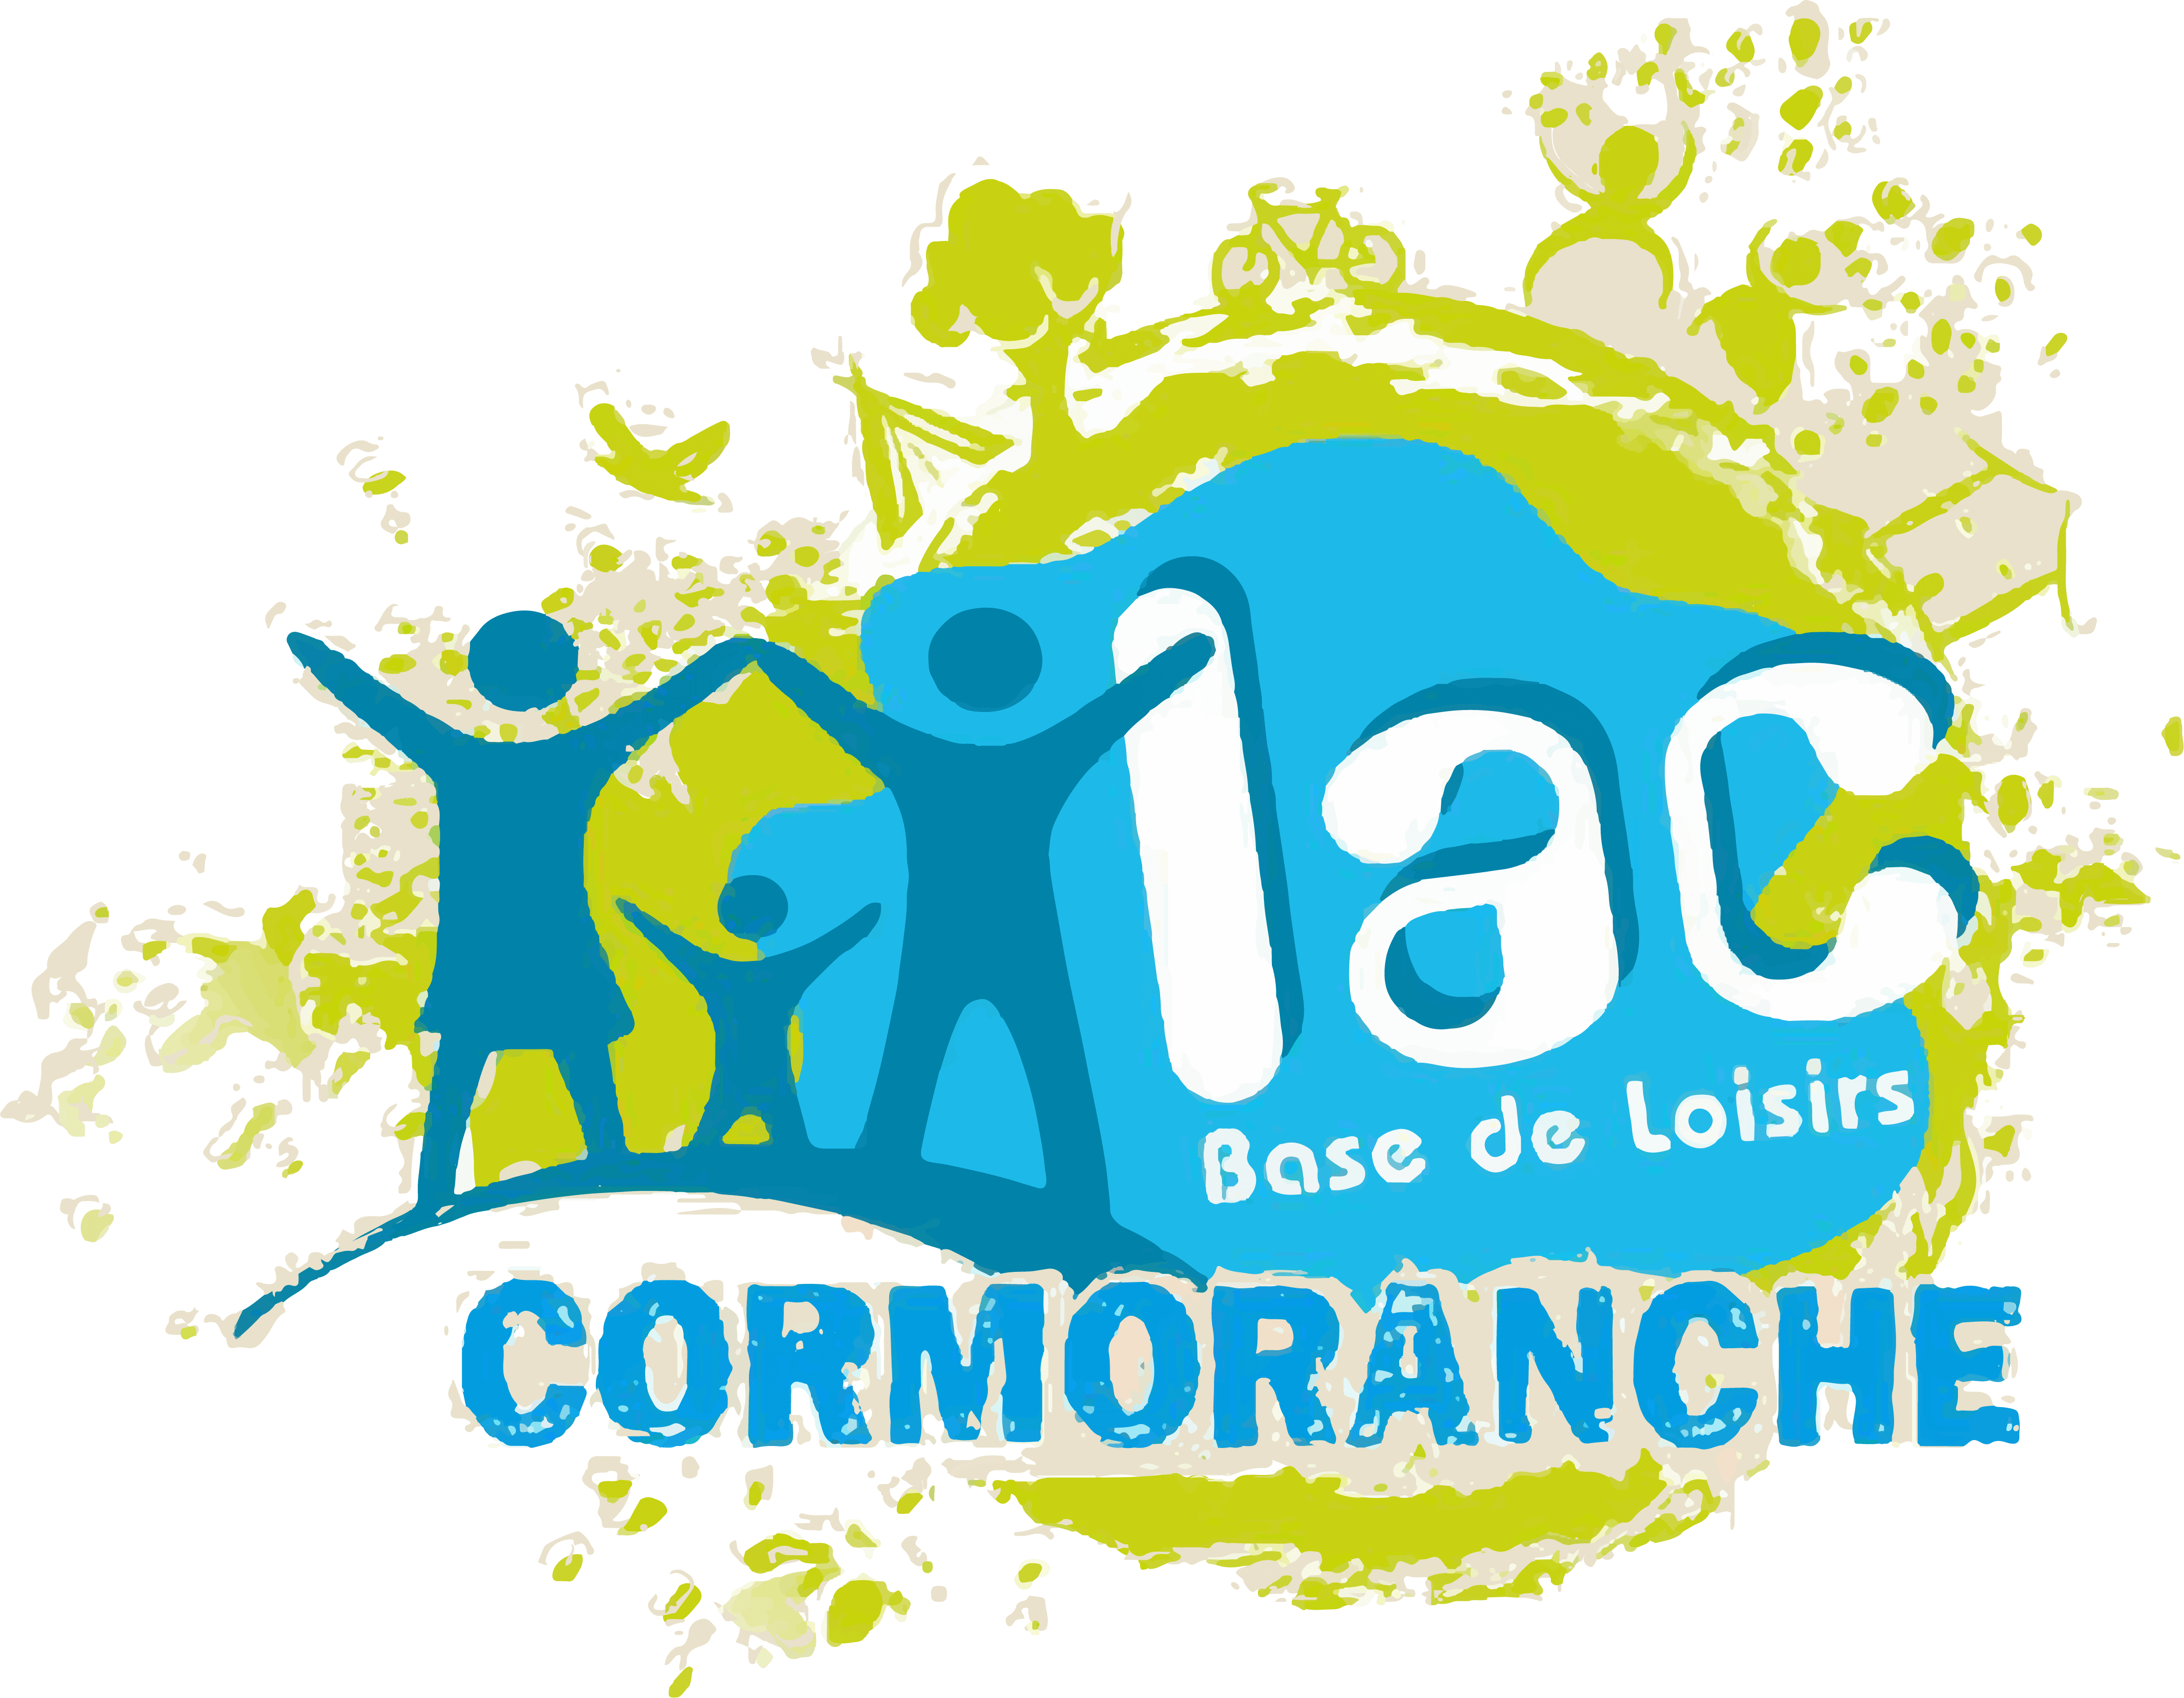 Lake Cormoranche logo and its leisure centre in Ain